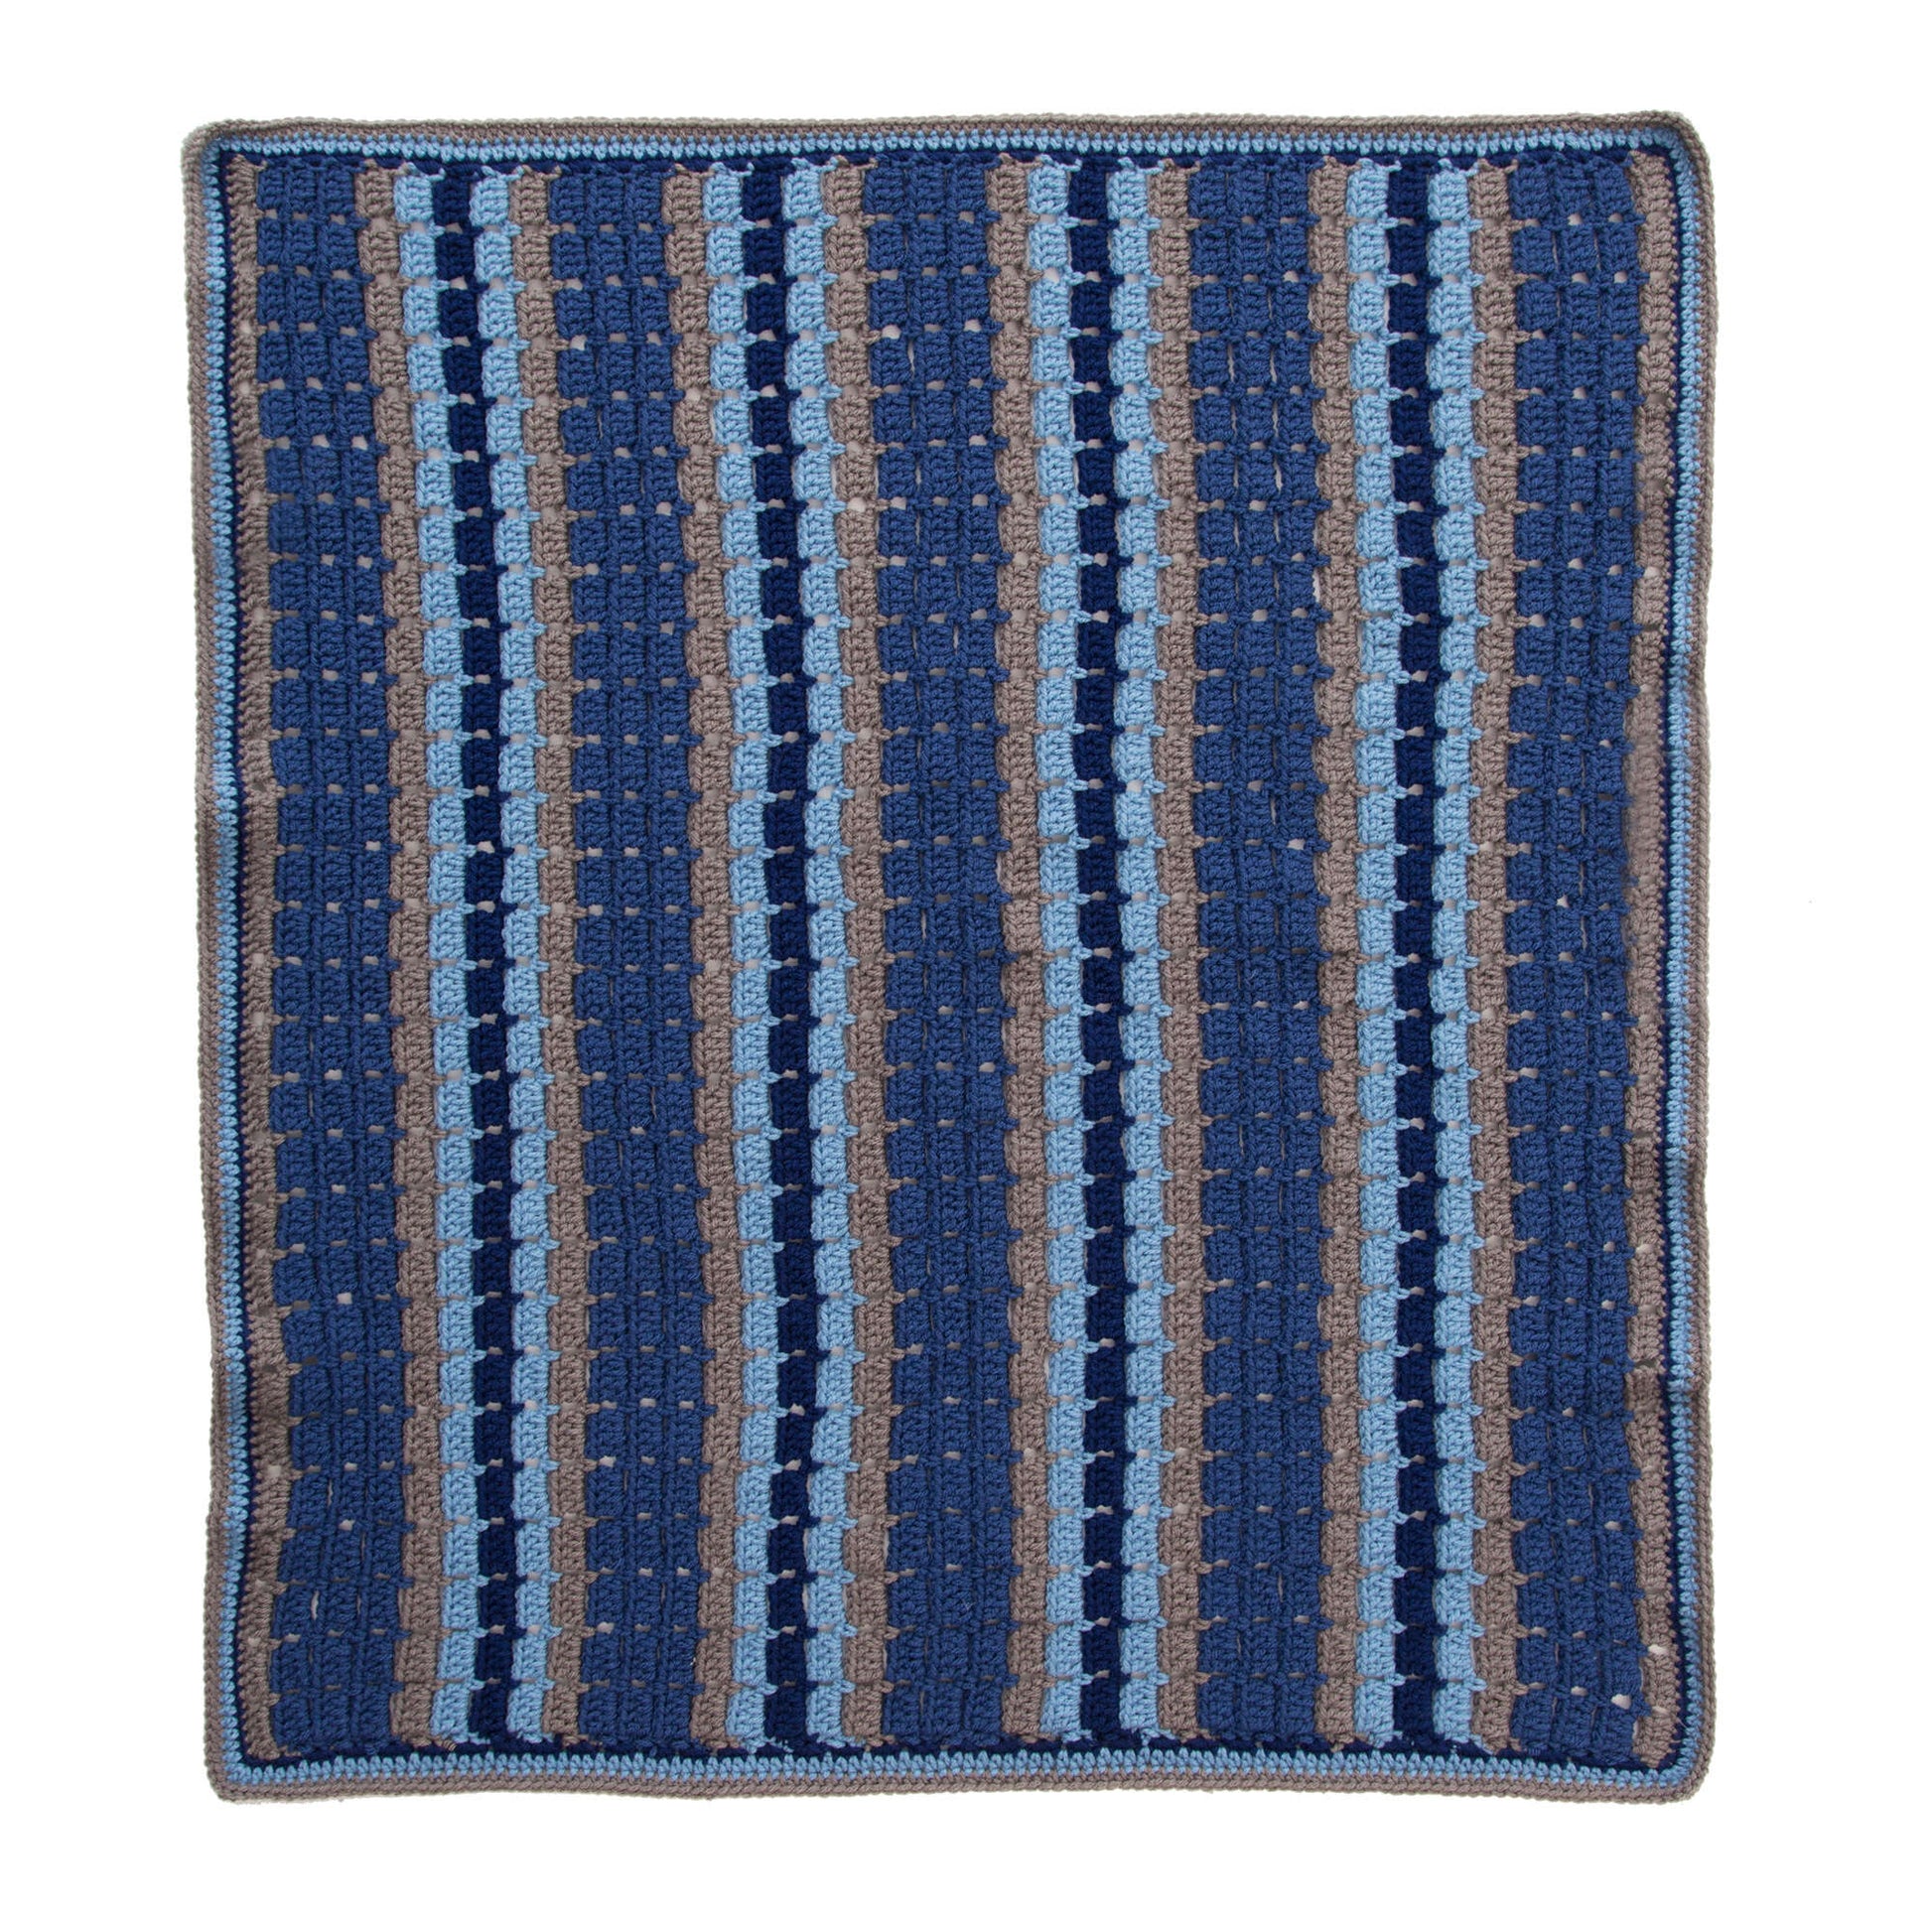 Free Red Heart Tag-A-Long Crochet Blanket & Hat Pattern